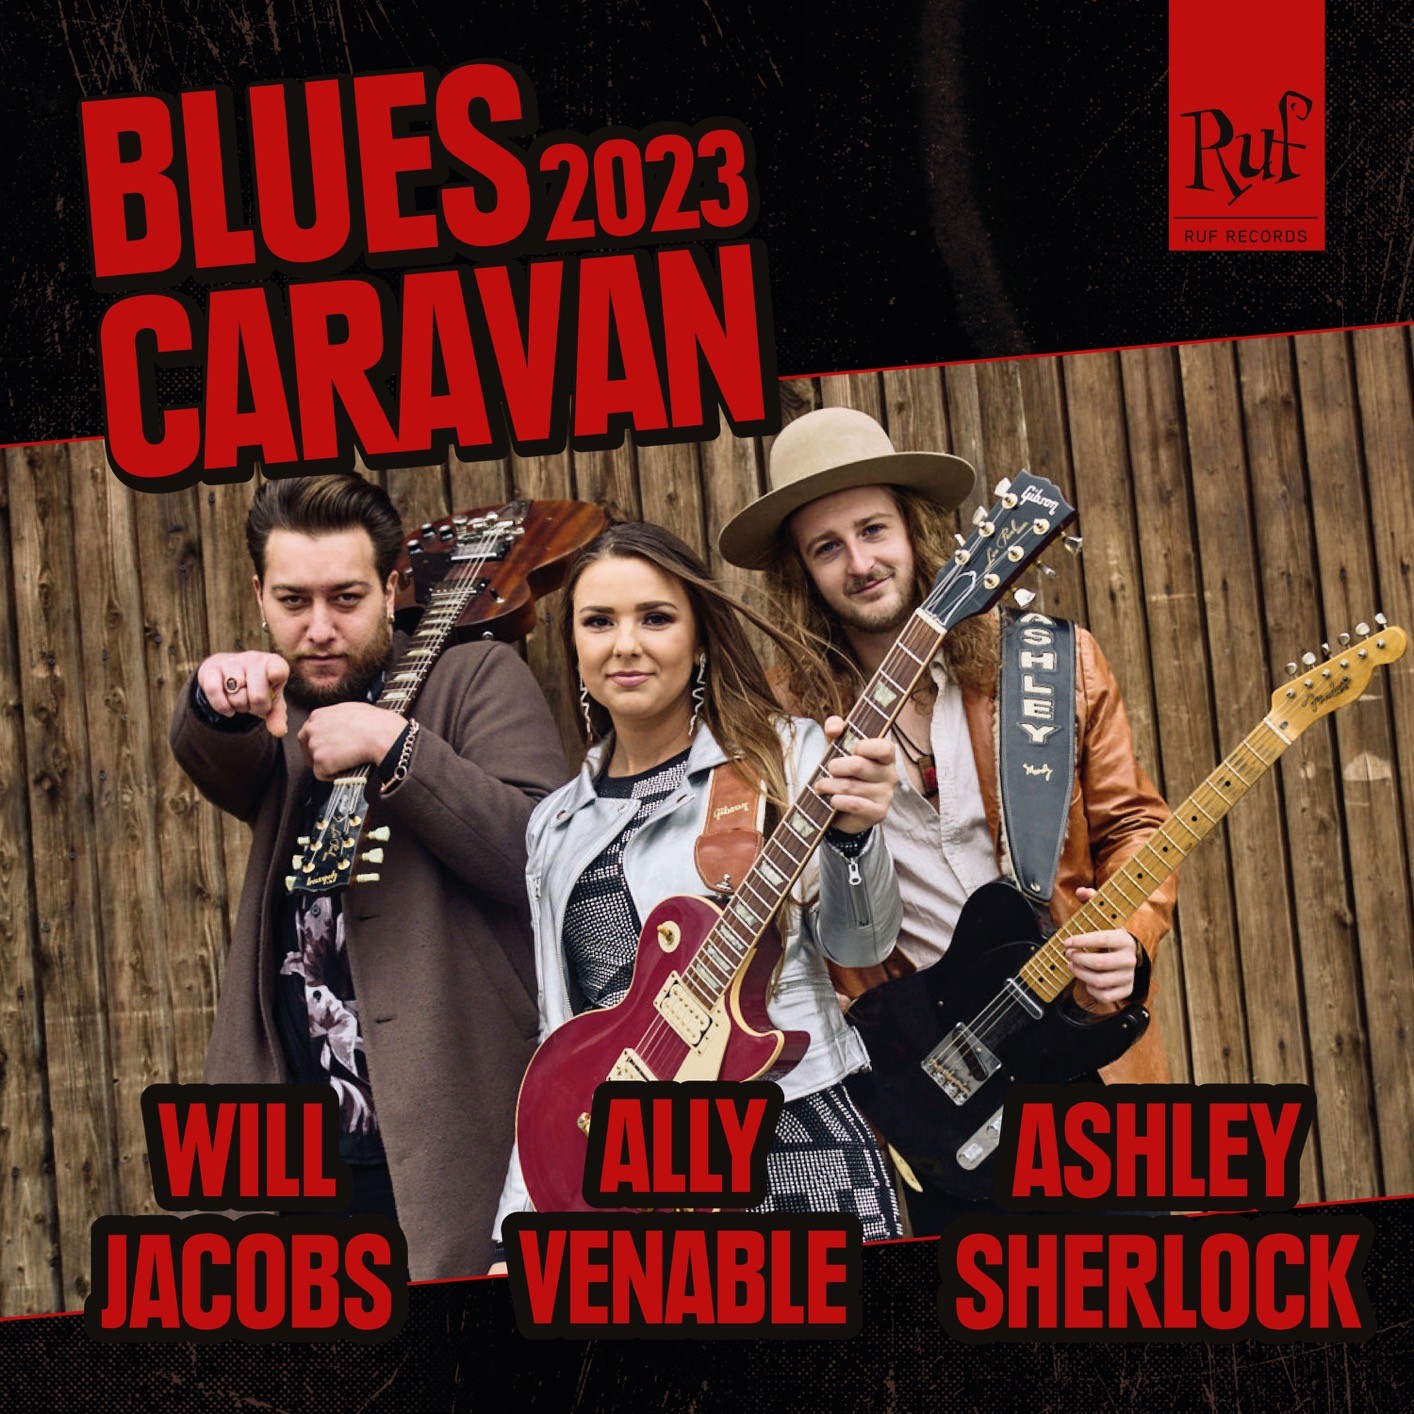 Blues Caravan 2023 - Will Jacobs, Ally Venable & Ashley Sherlock